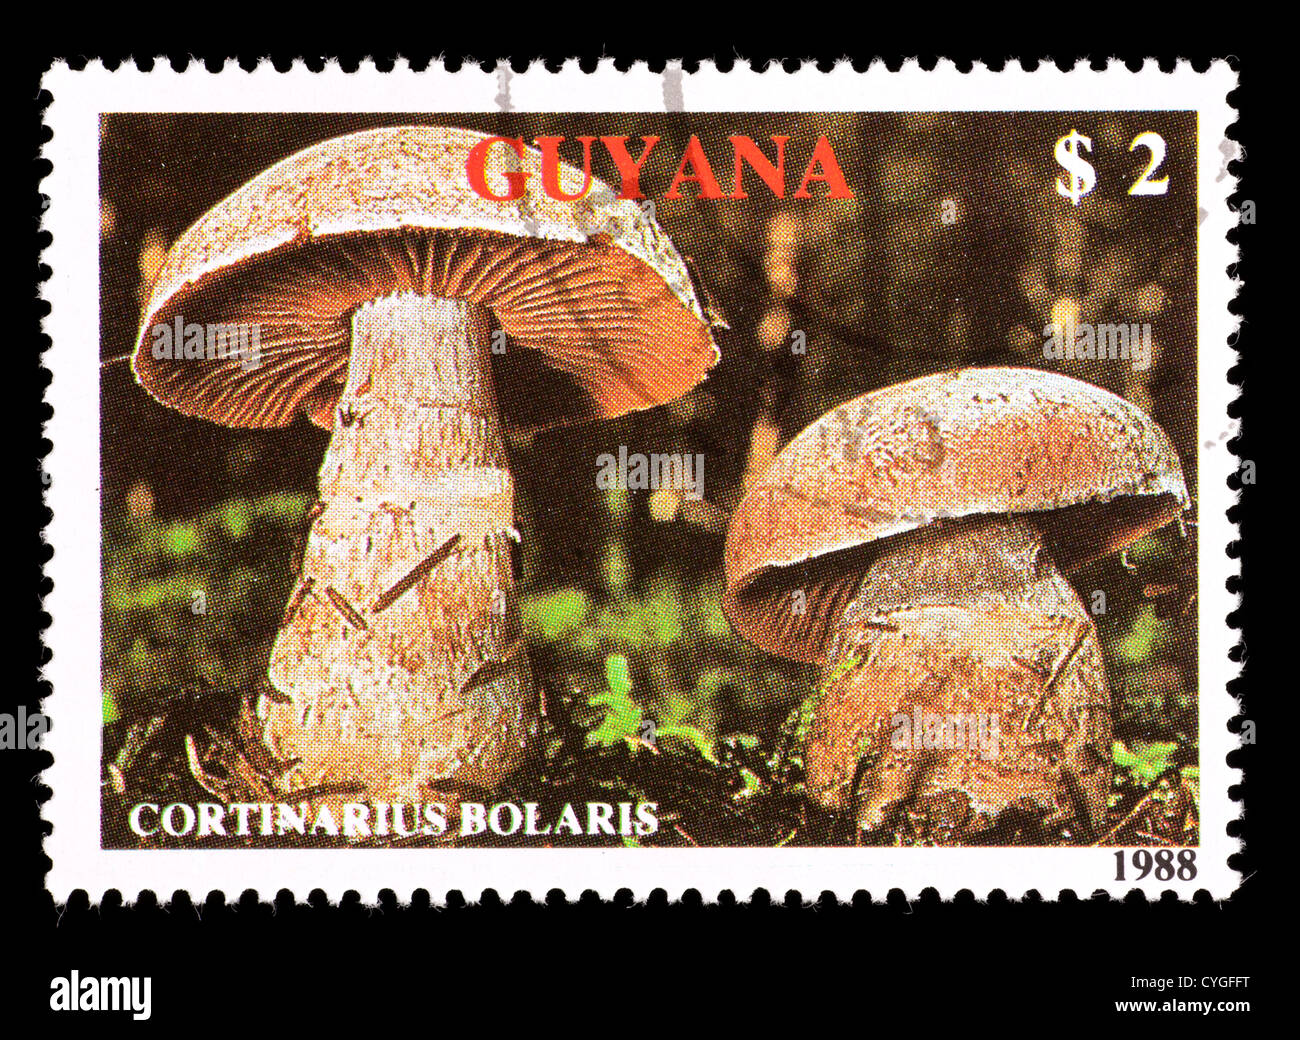 Postage stamp from Guyana depicting two mushrooms (Cortinarius bolaris) Stock Photo